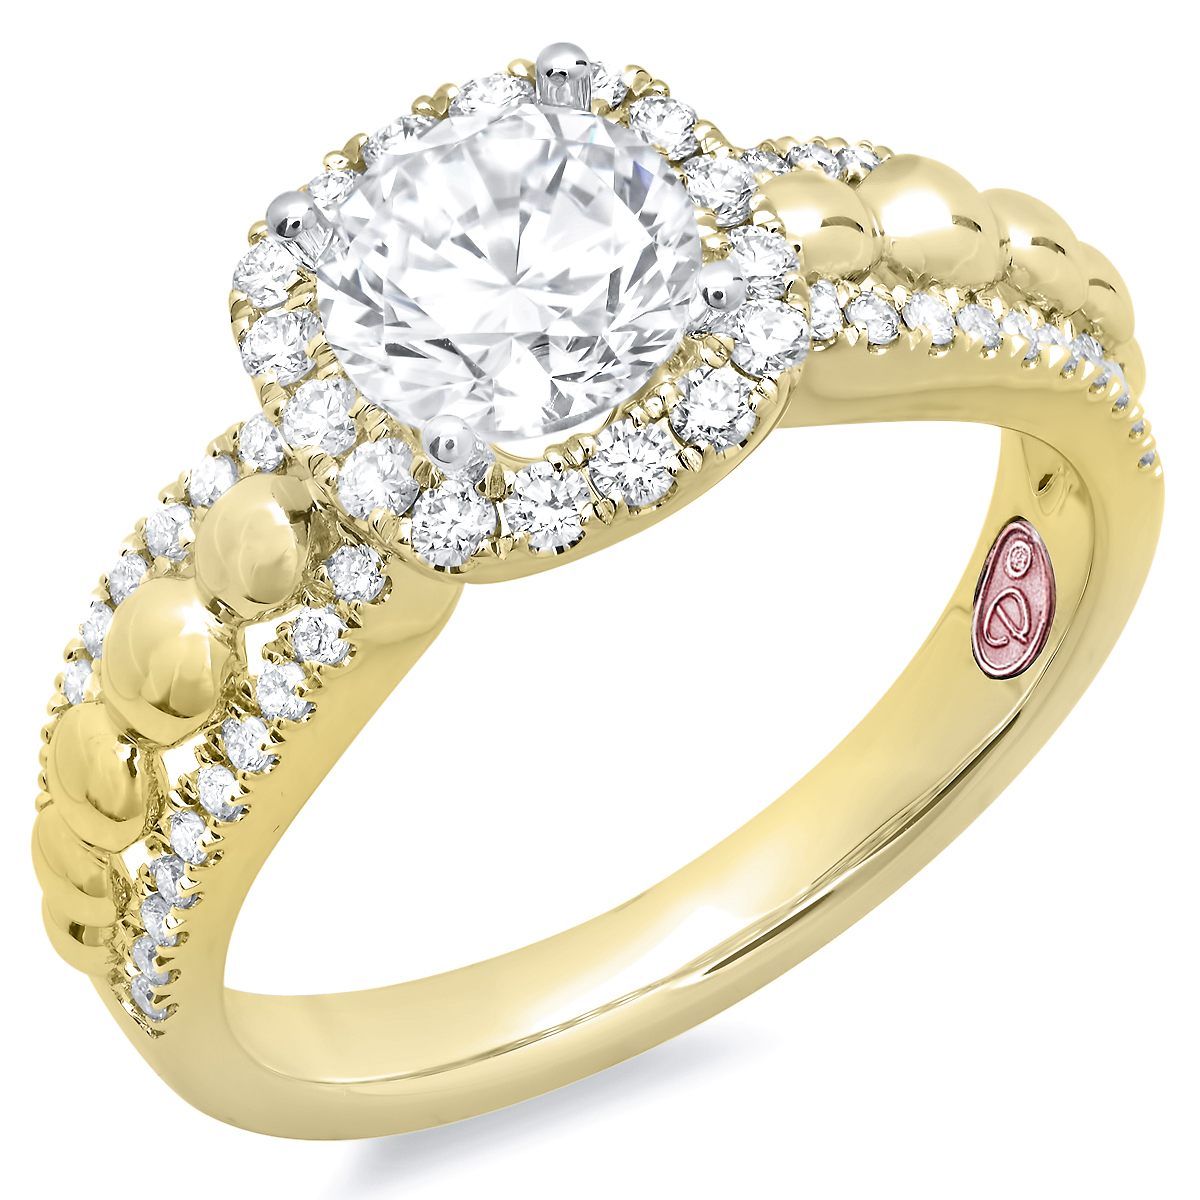 Designer Engagement Rings - DW7601